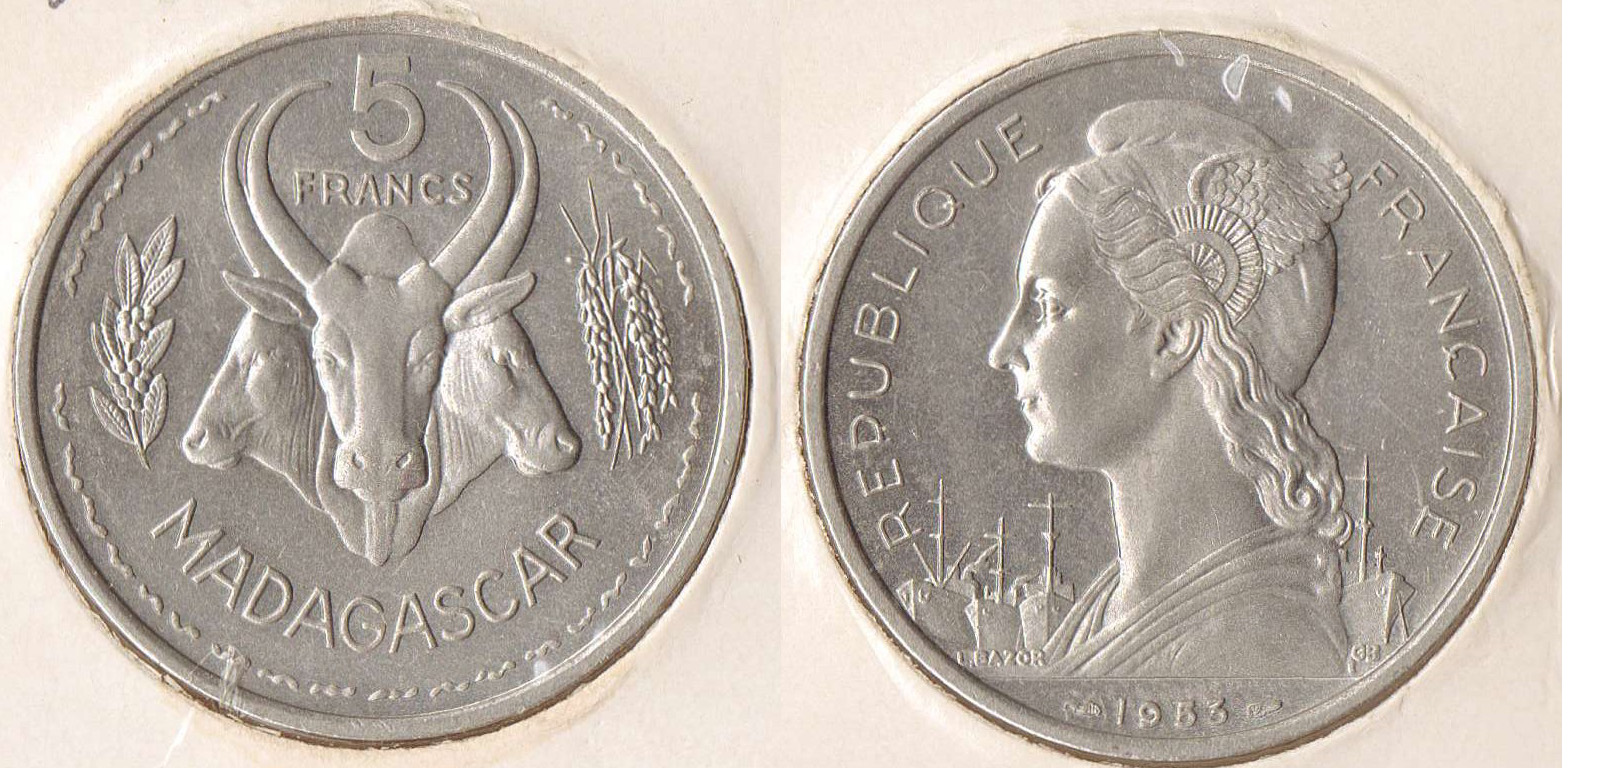 1953 madagascar 5 francs.jpg